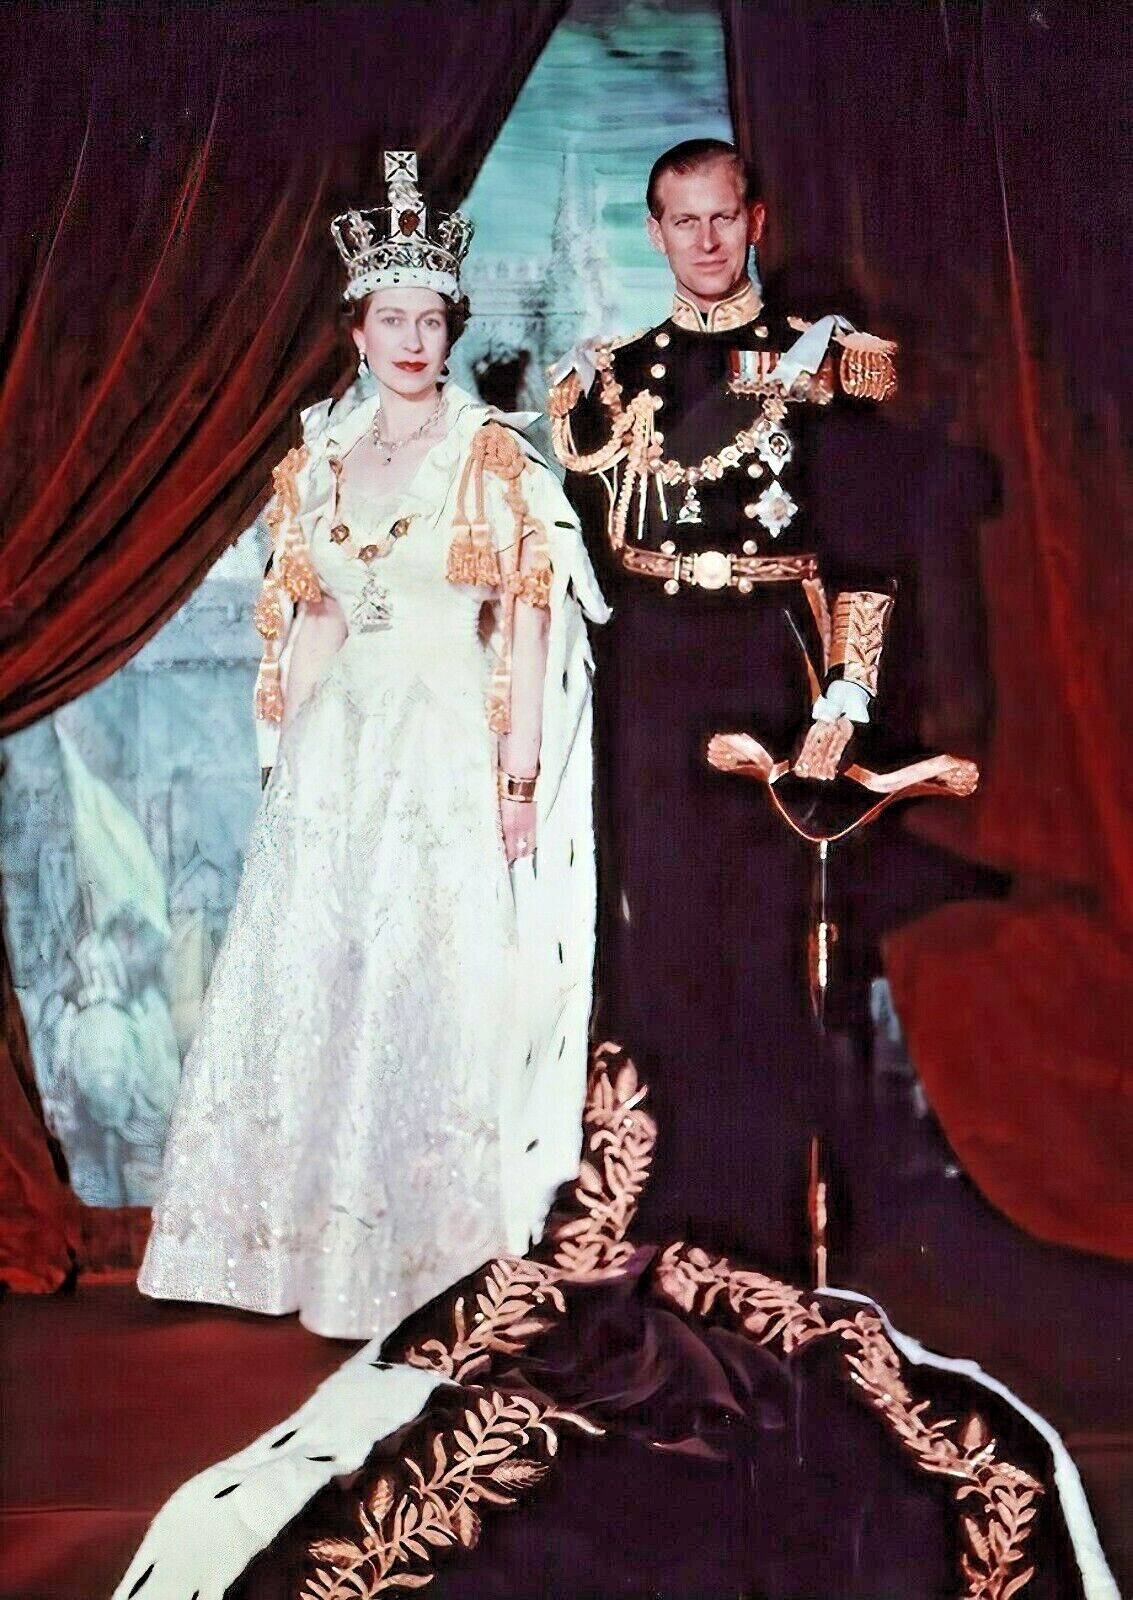 QUEEN ELIZABETH II & PRINCE PHILIP-Coronation Portrait 1953-London England